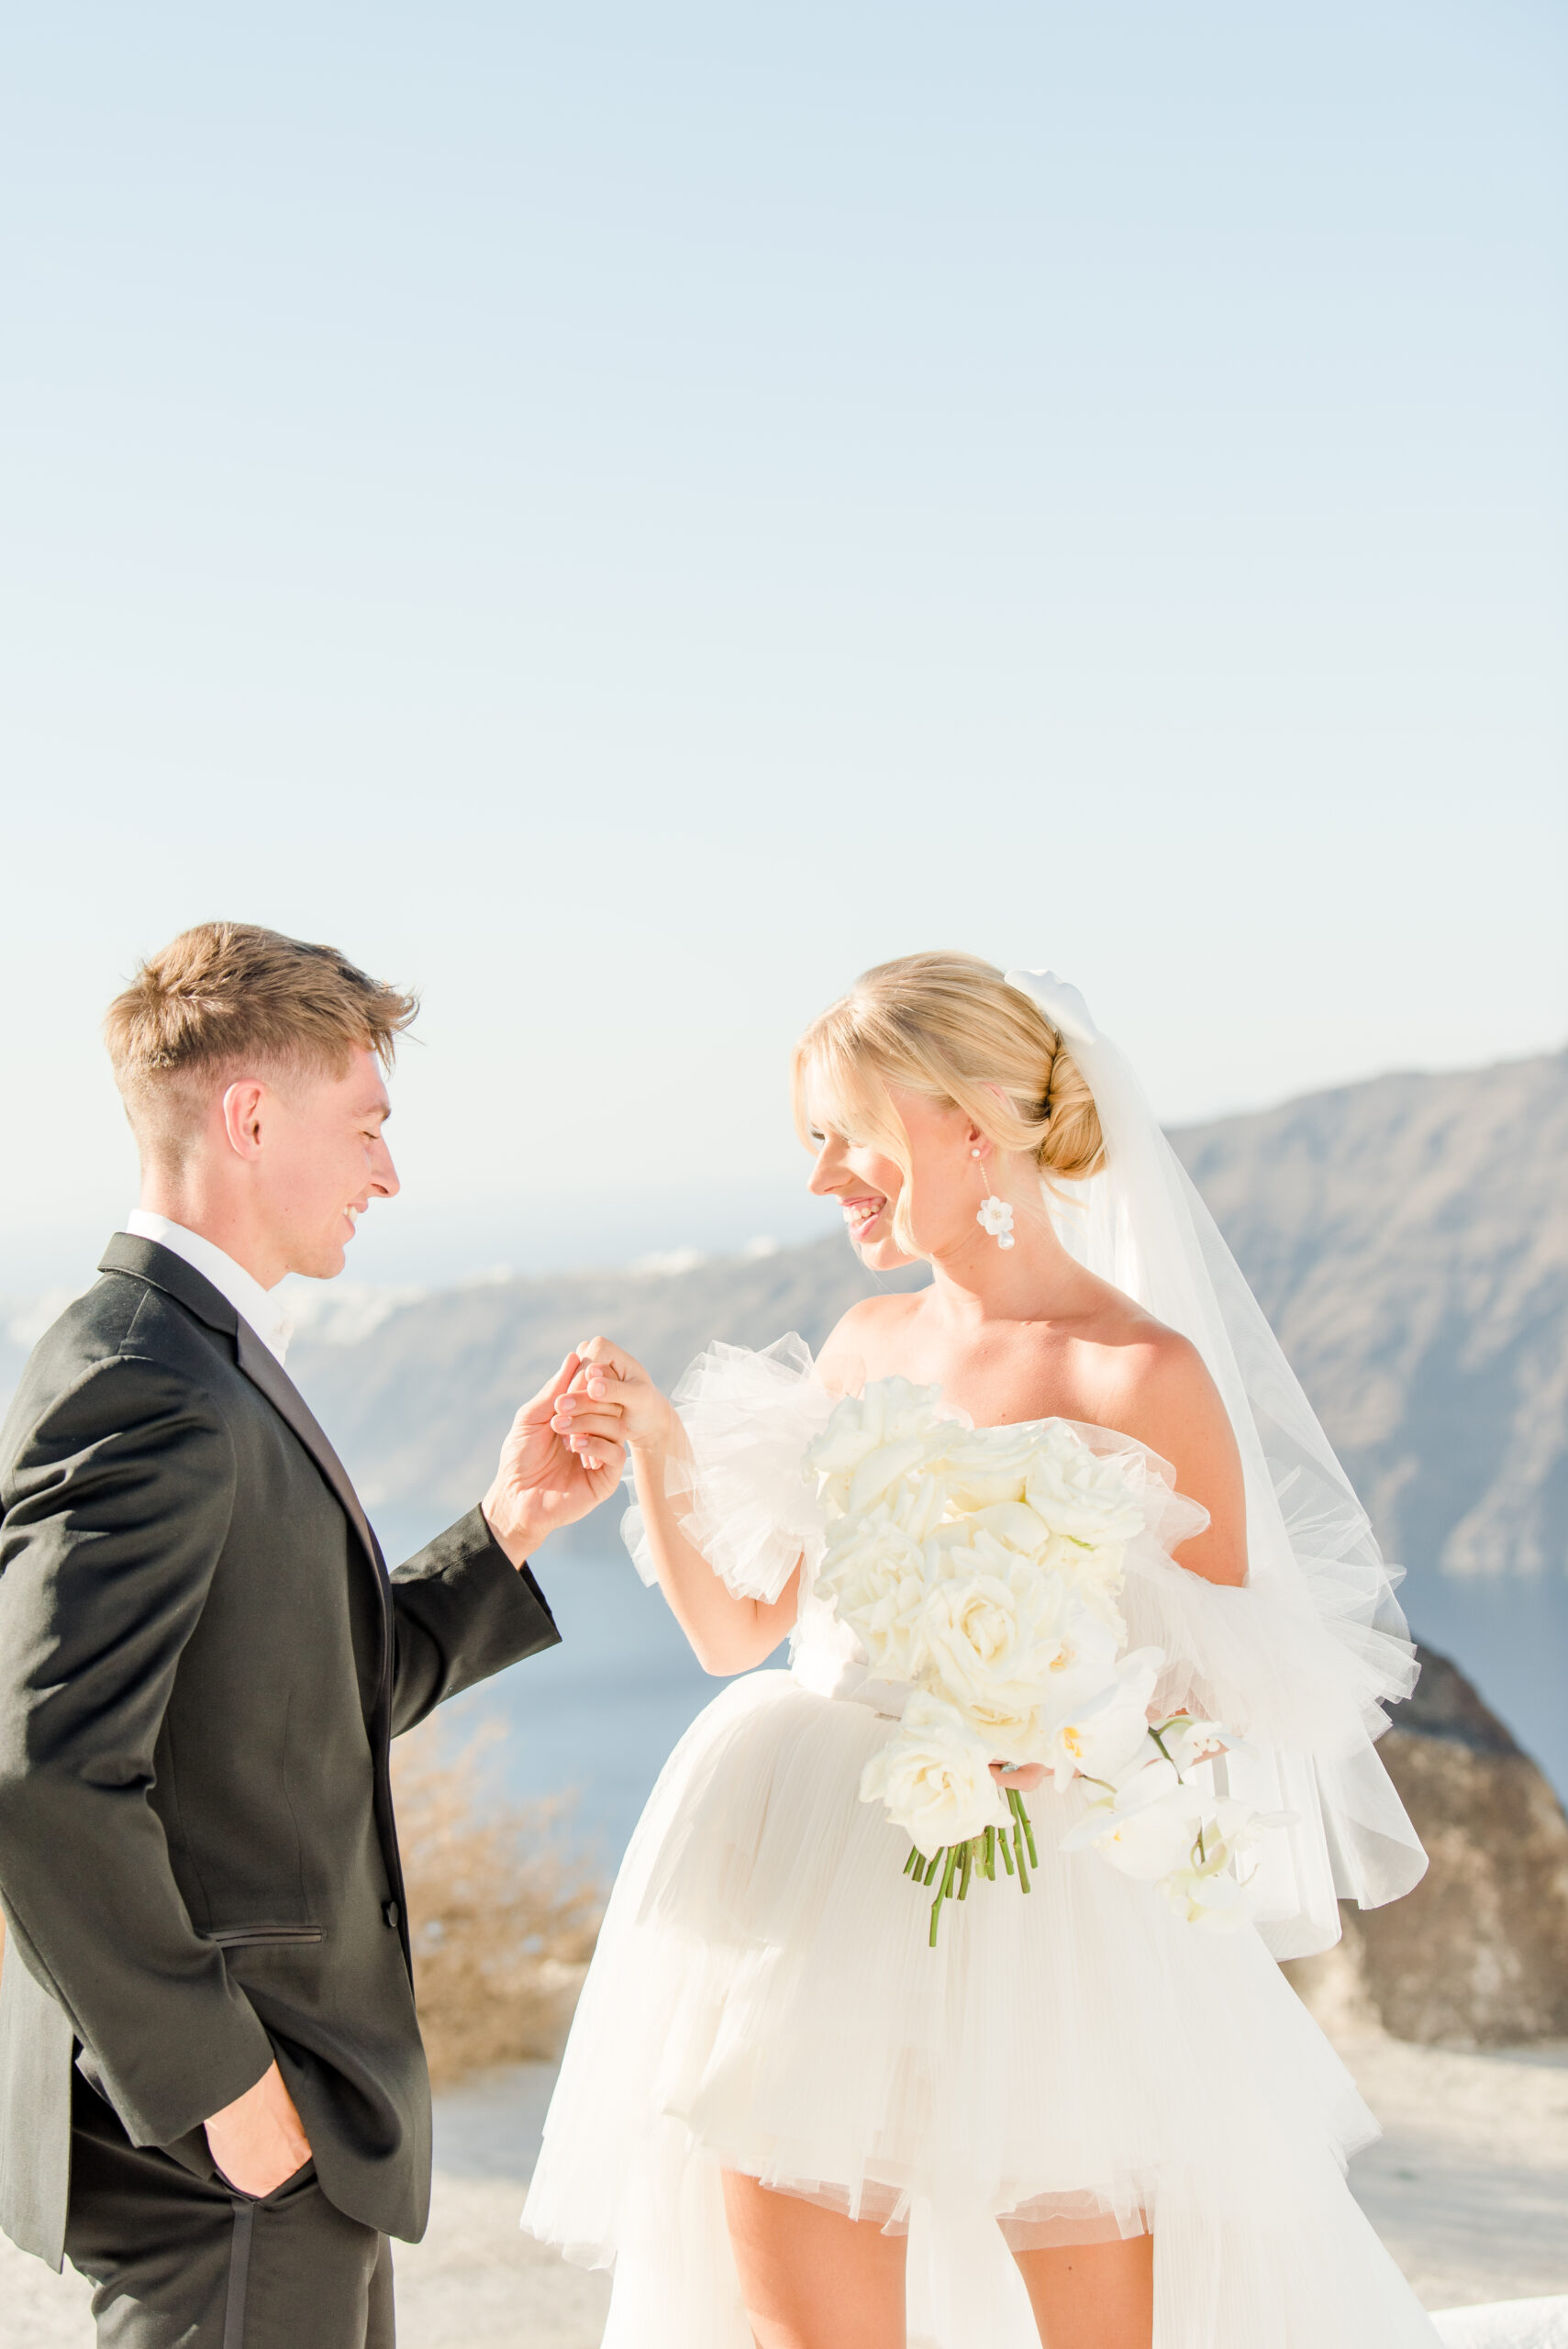 Wedding at Rocabella Santorini